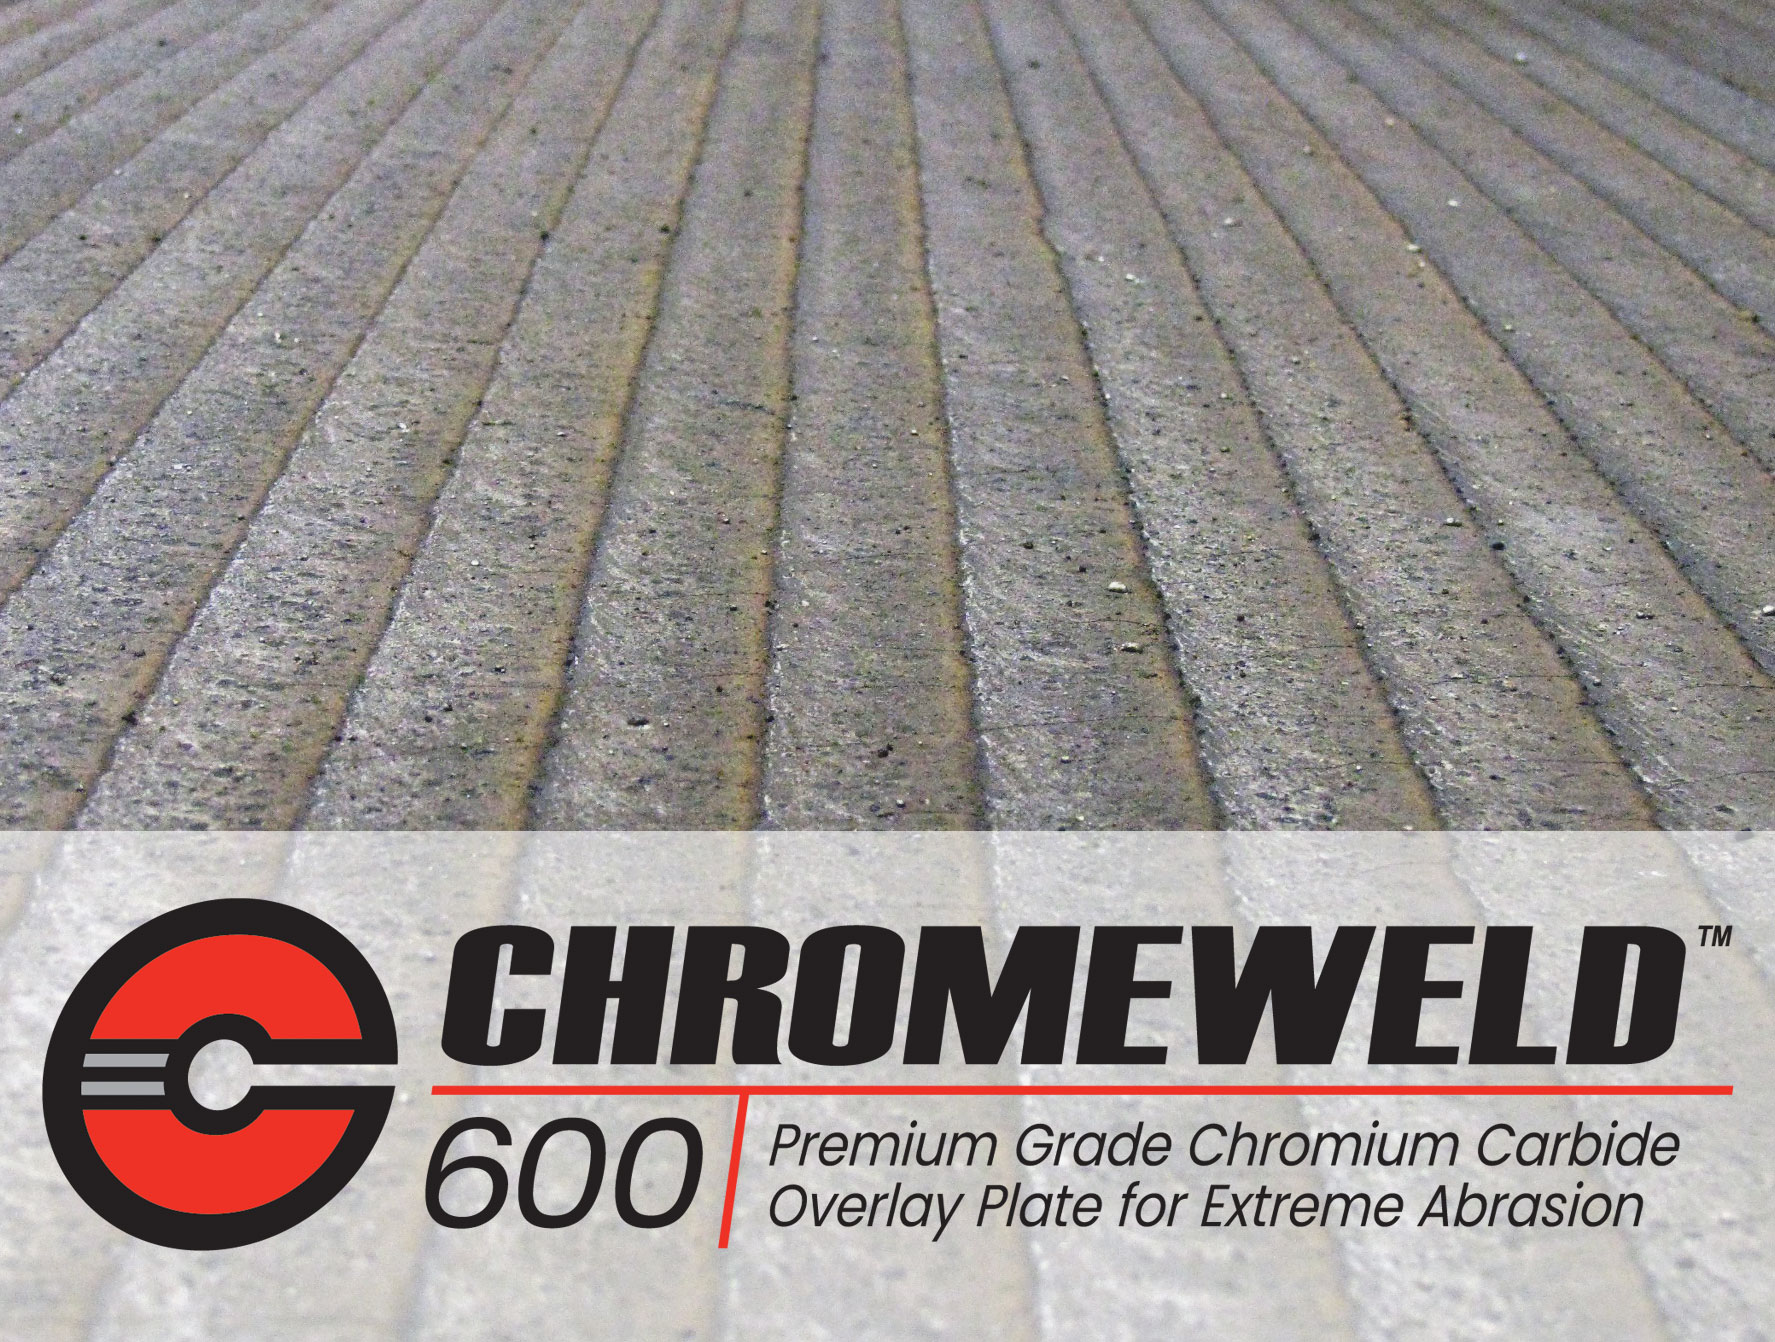 CHROMEWELD 600